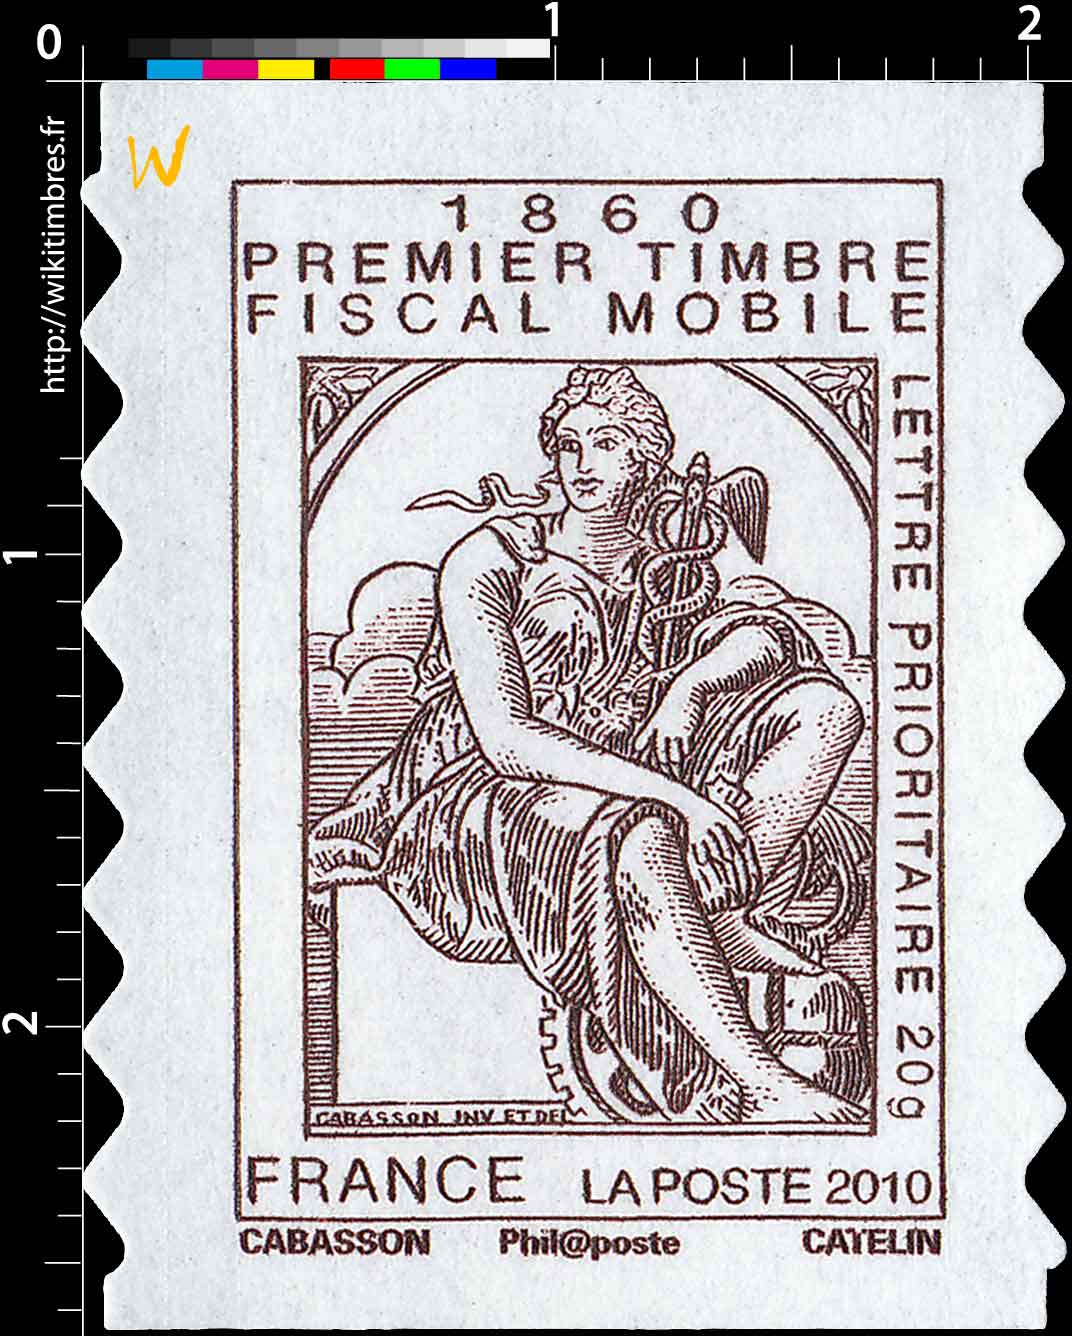 2010 PREMIER TIMBRE FISCAL MOBILE 1860